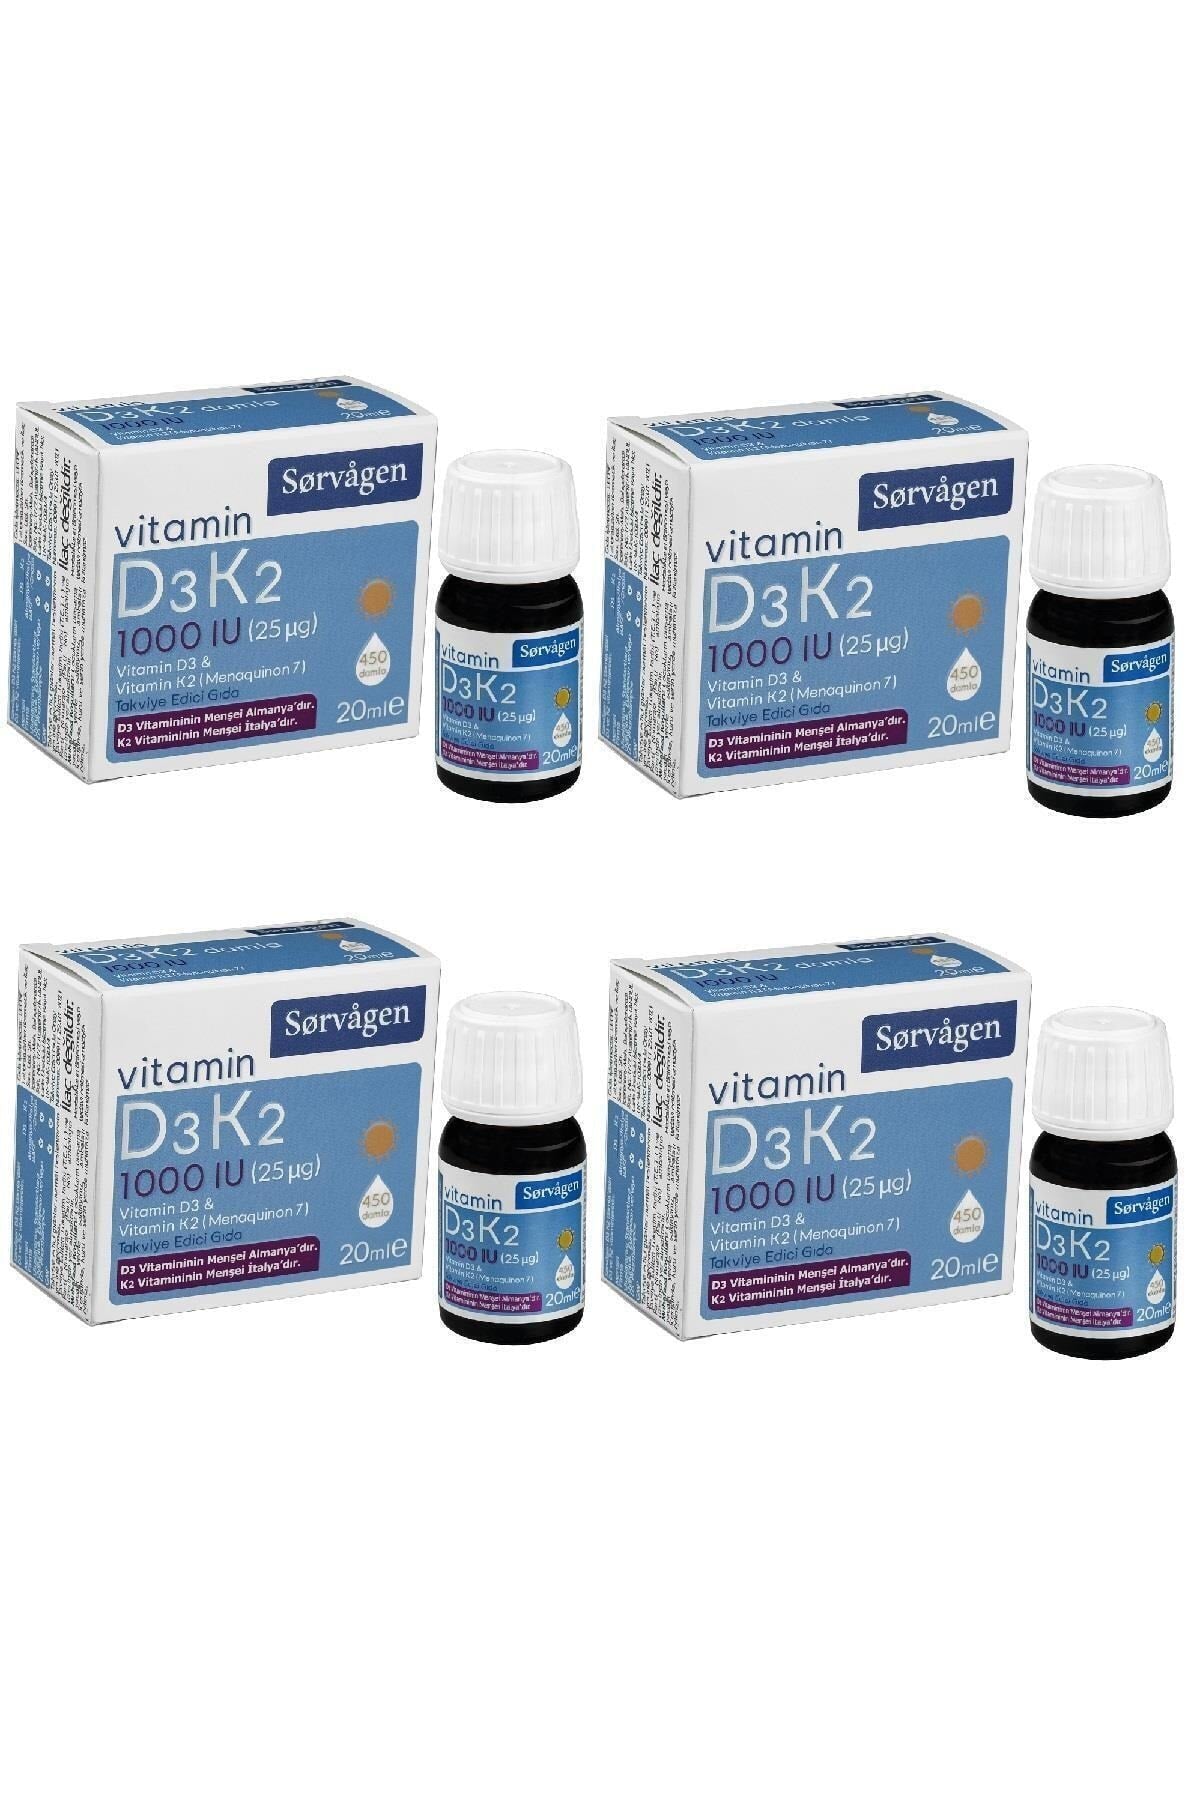 Sorvagen Vitamin D3K2 1000 IU 20 ml Damla - 4'lü Paket